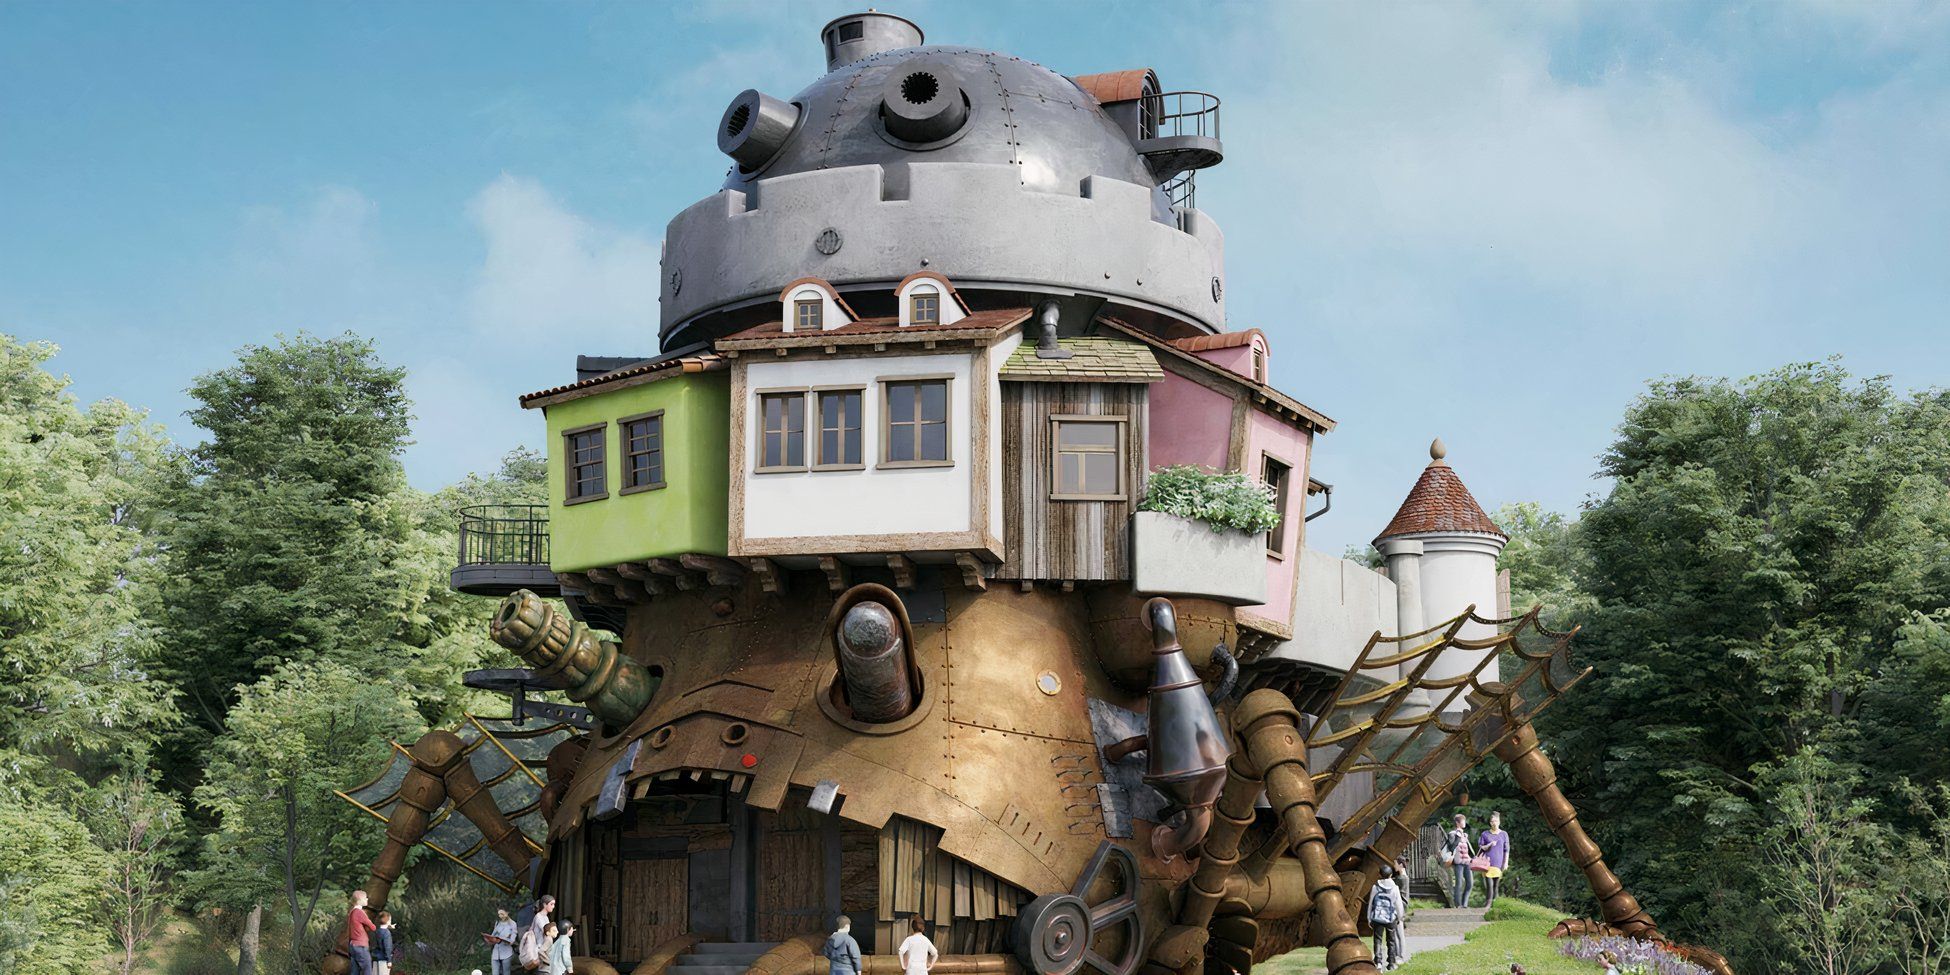 Howl's Moving Castle building Ghibli Park